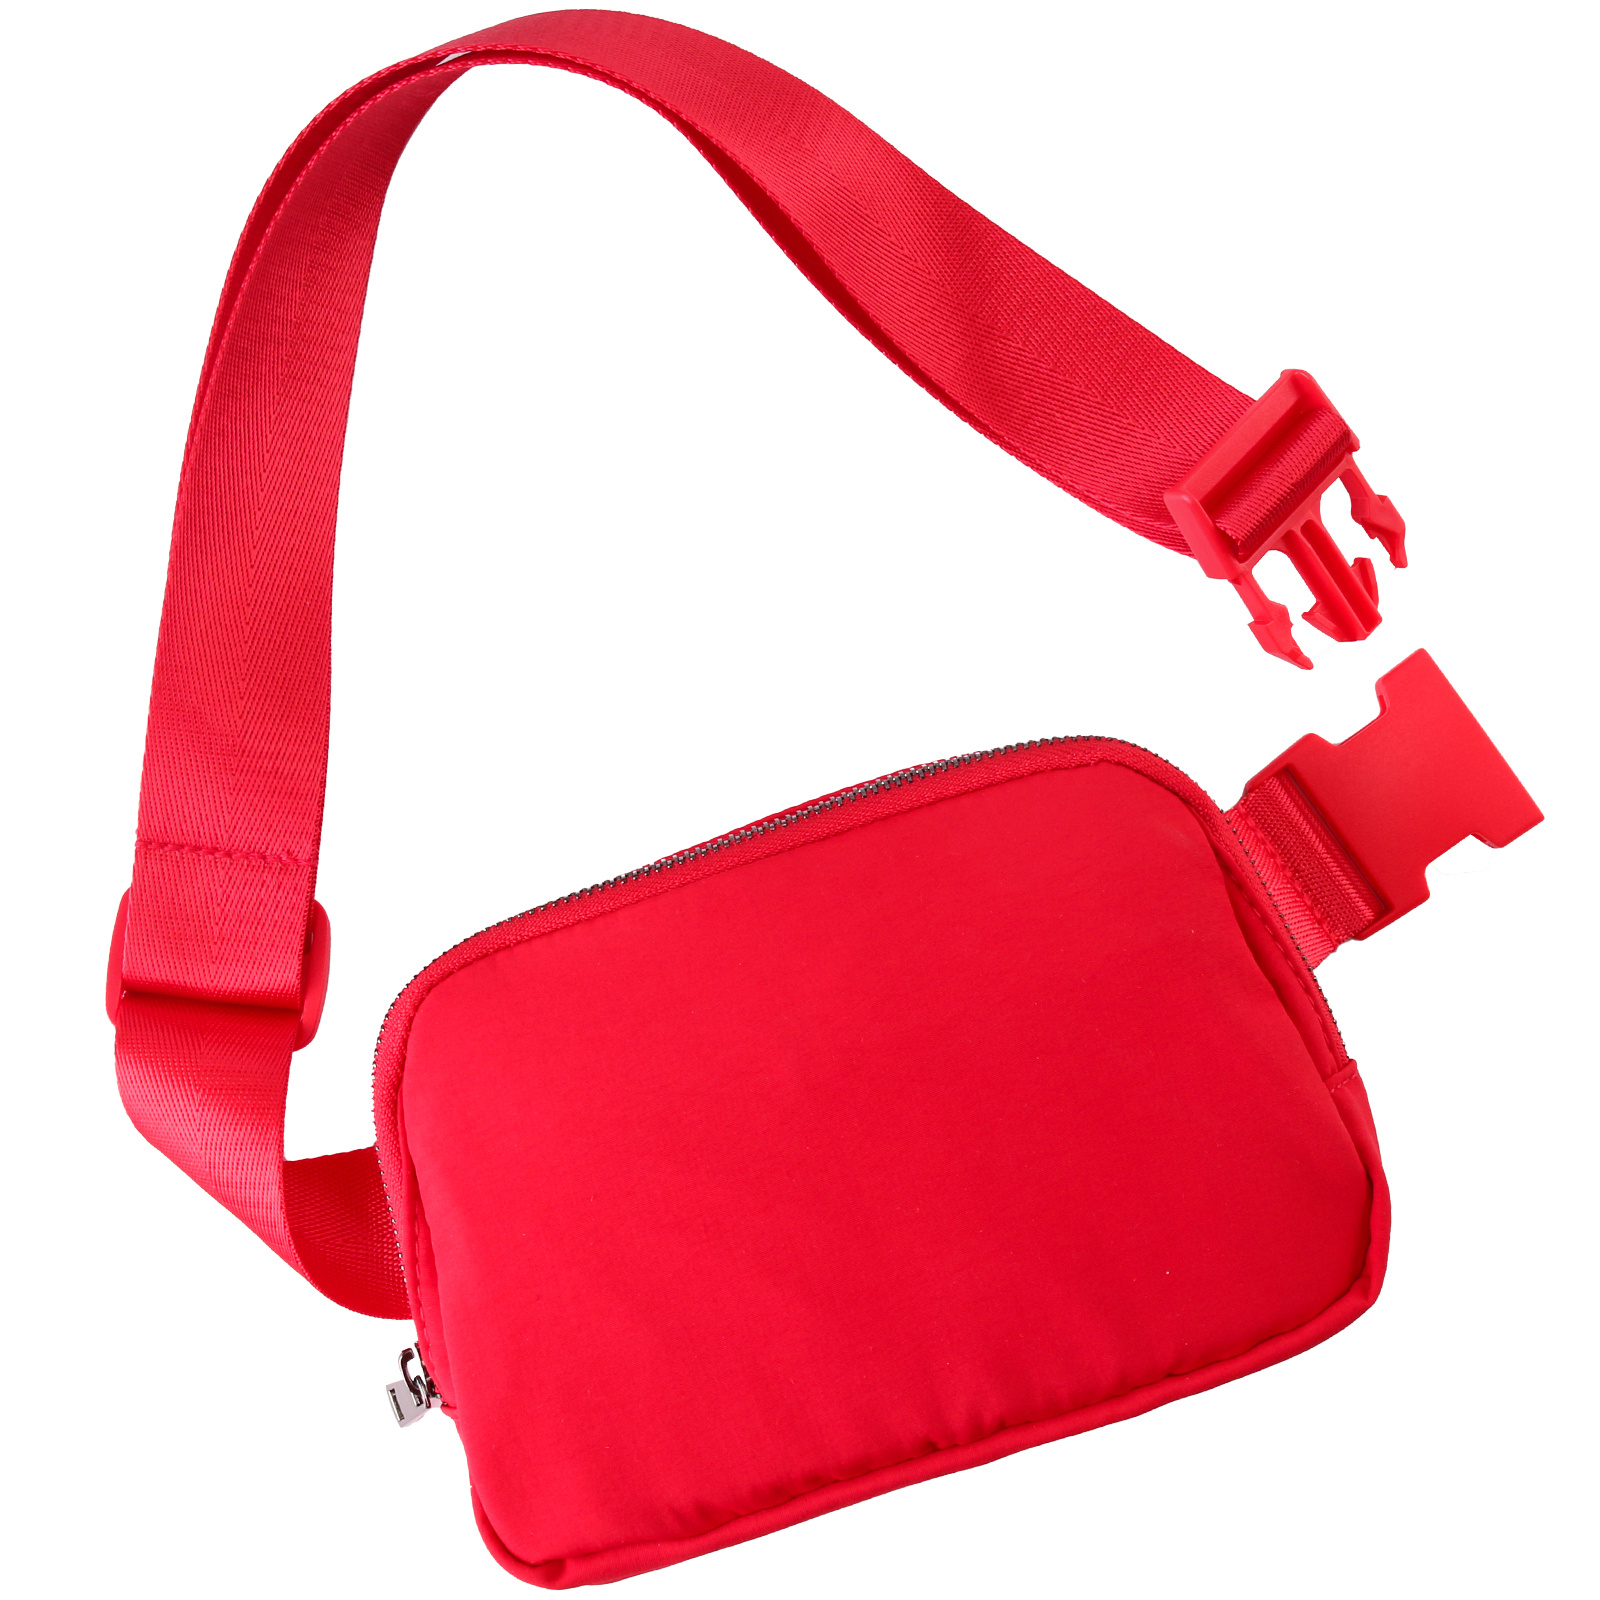 lululemon gifts under $100: Popular belt bags, everywhere bags